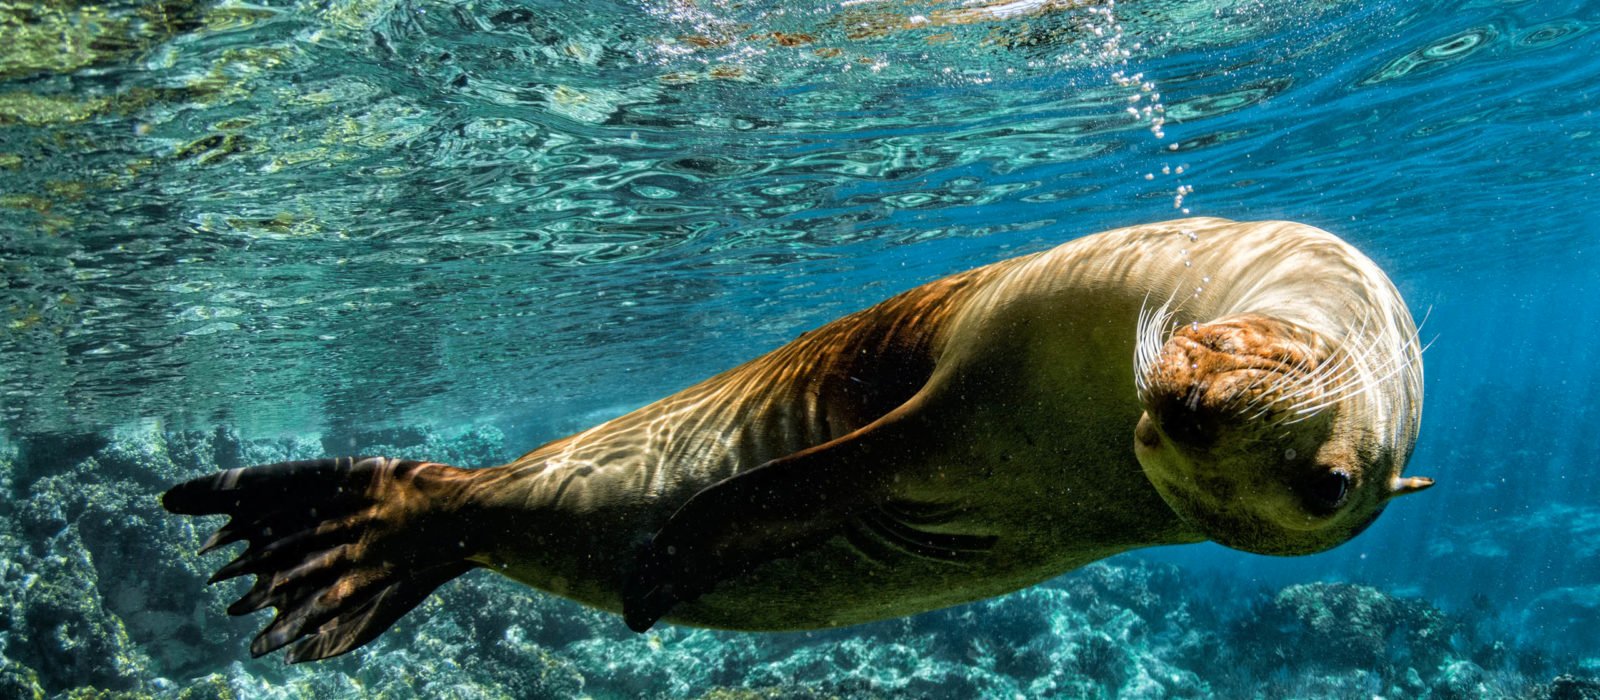 seao-lion-swimming-underwater-galapagos